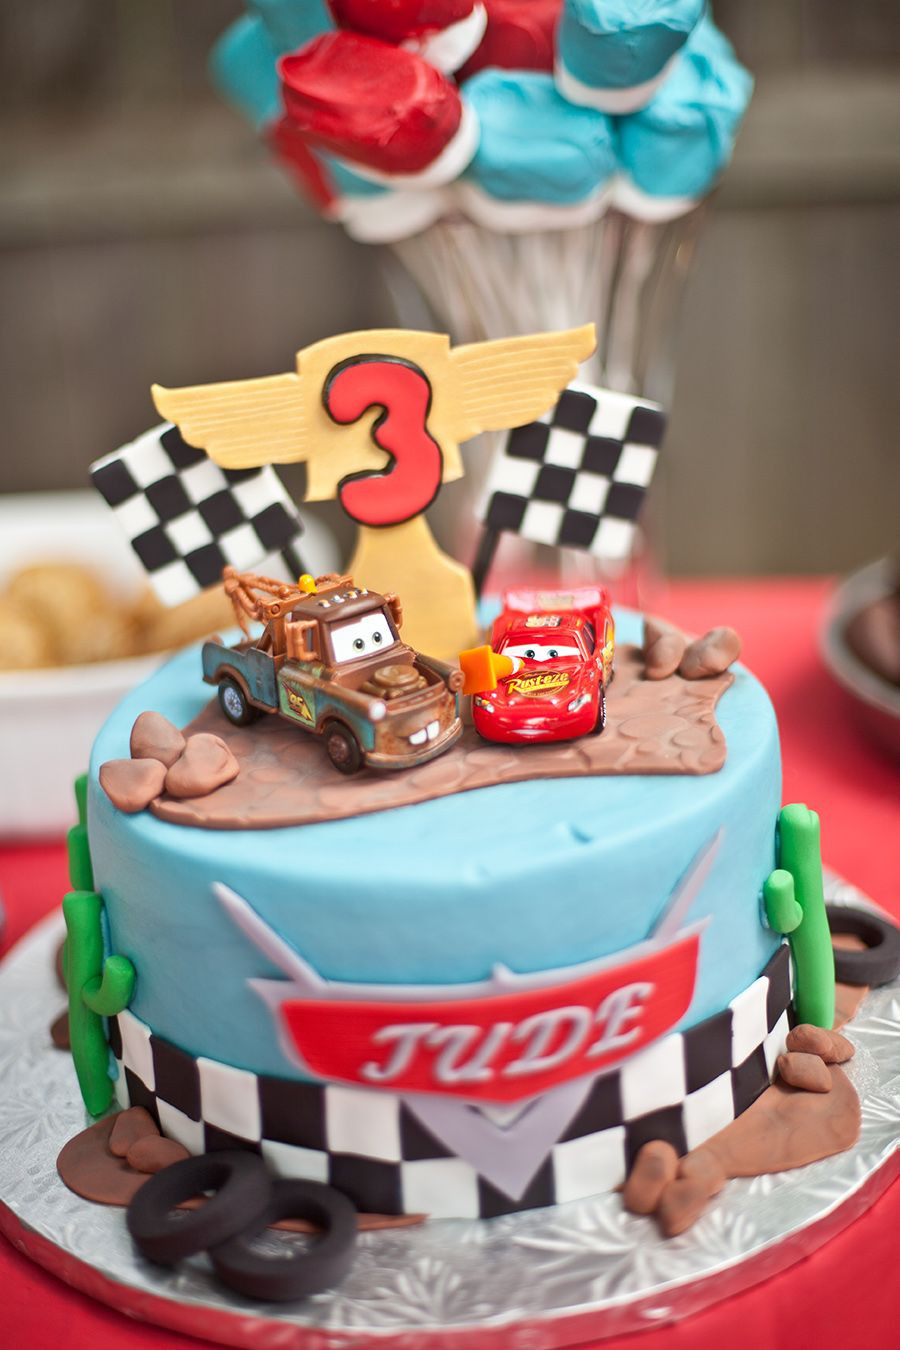 Best ideas about Car Birthday Cake
. Save or Pin Disney Cars Birthday Cake Landon already has both Now.